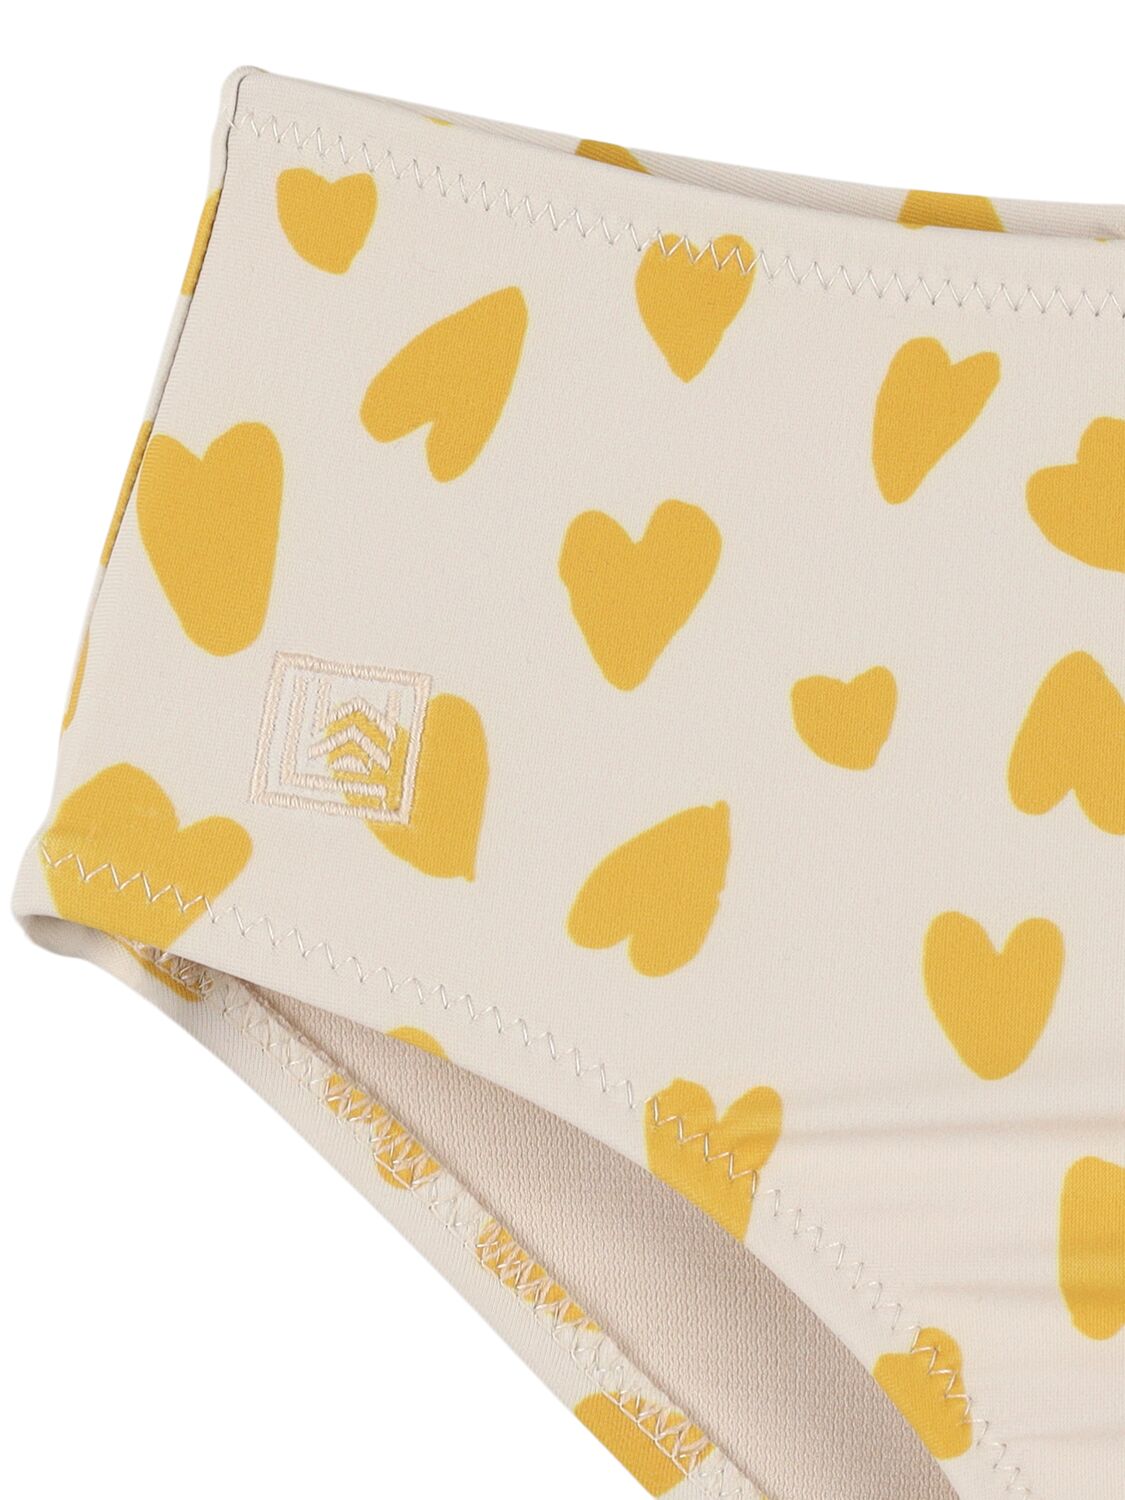 Shop Liewood Hearts Print Recycled Nylon Bikini In 白色,黄色